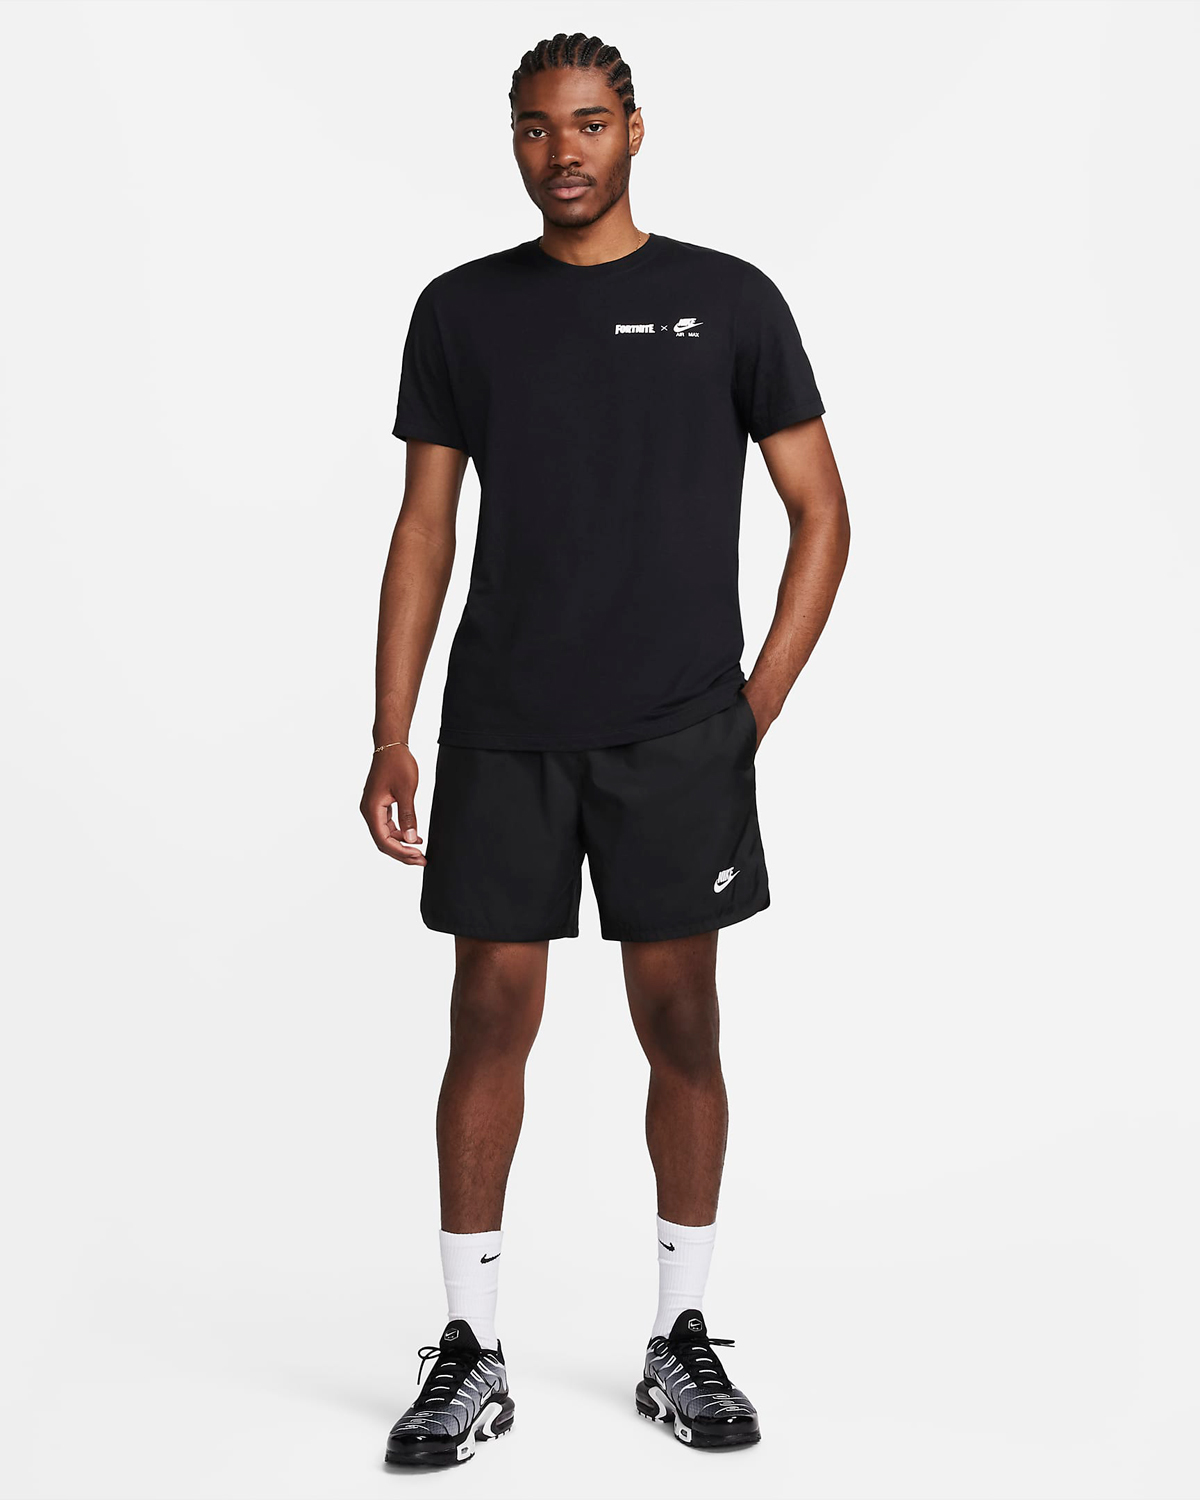 Nike-Fortnite-Air-Max-T-Shirt-Black